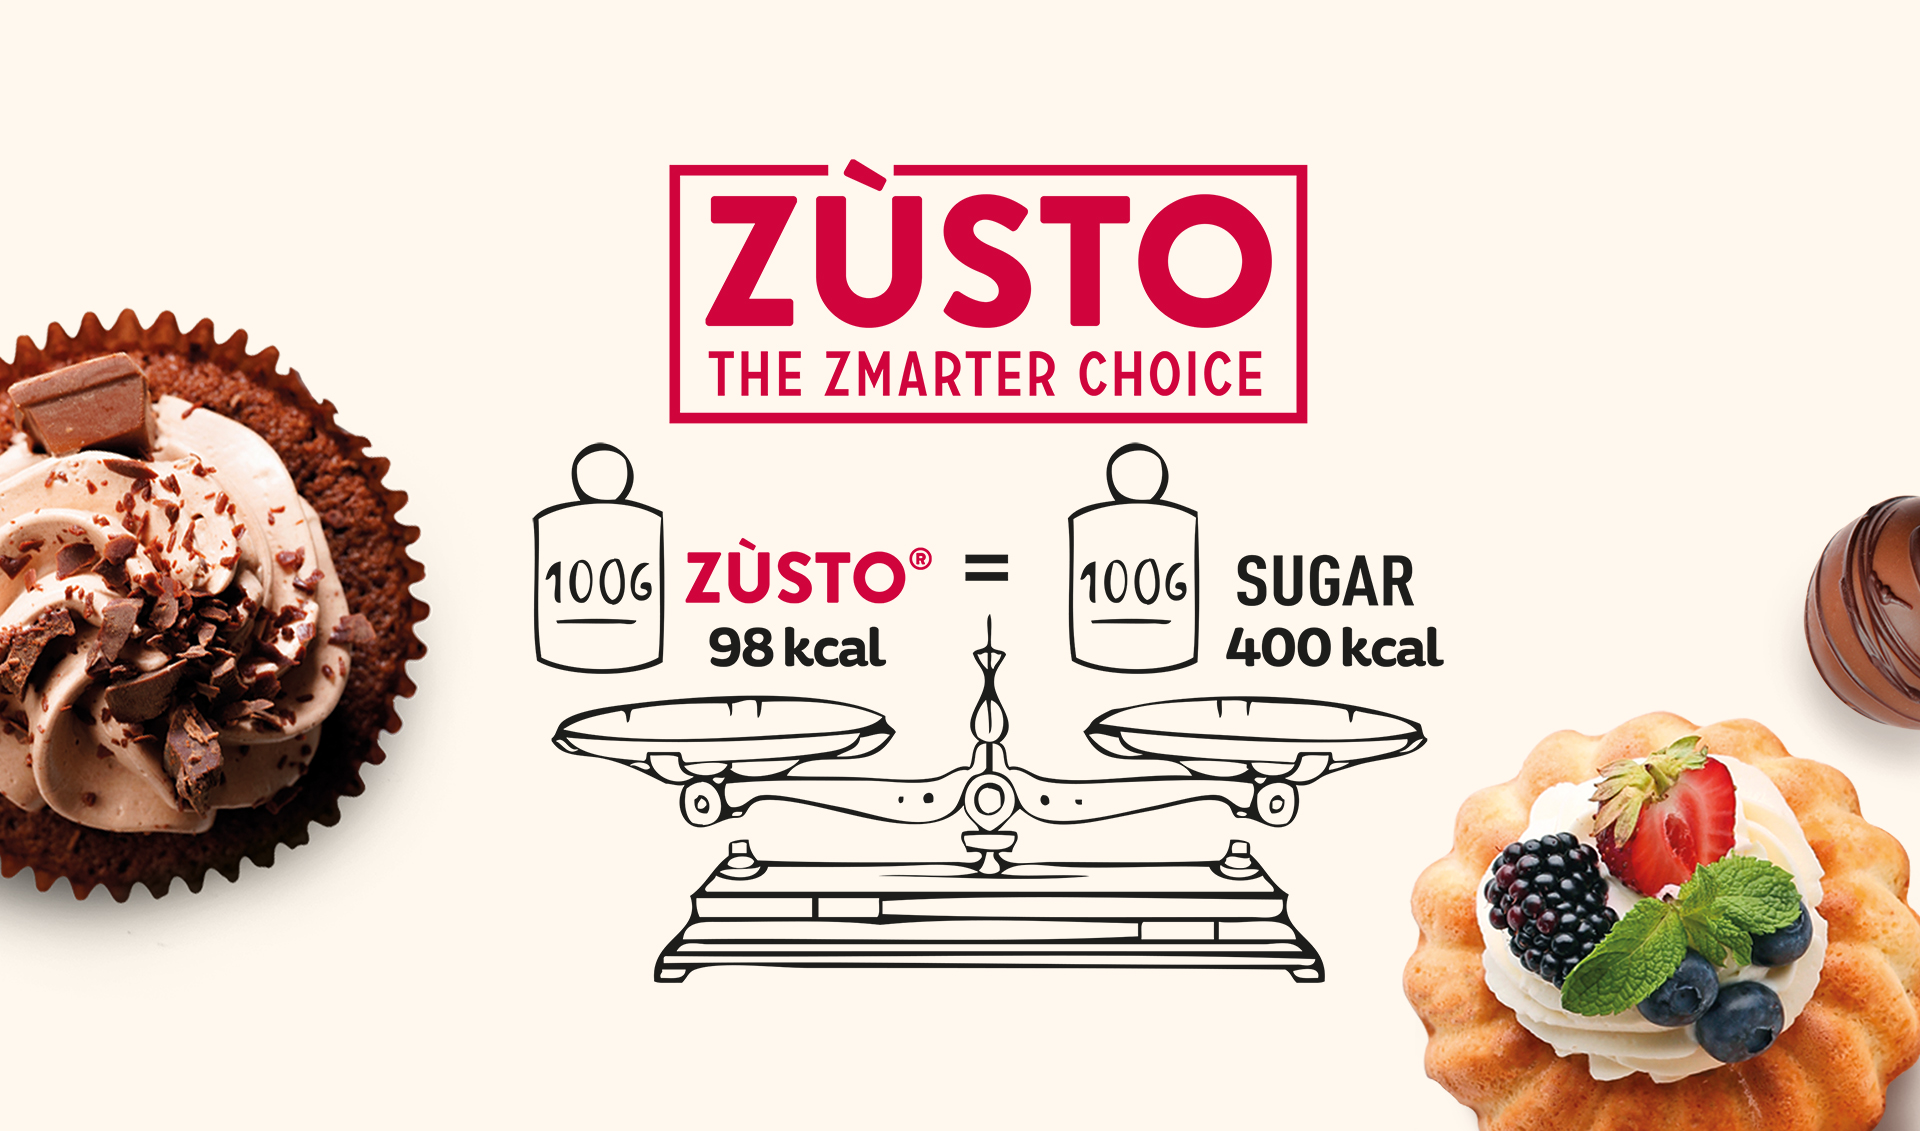 Zùsto the smarter choice